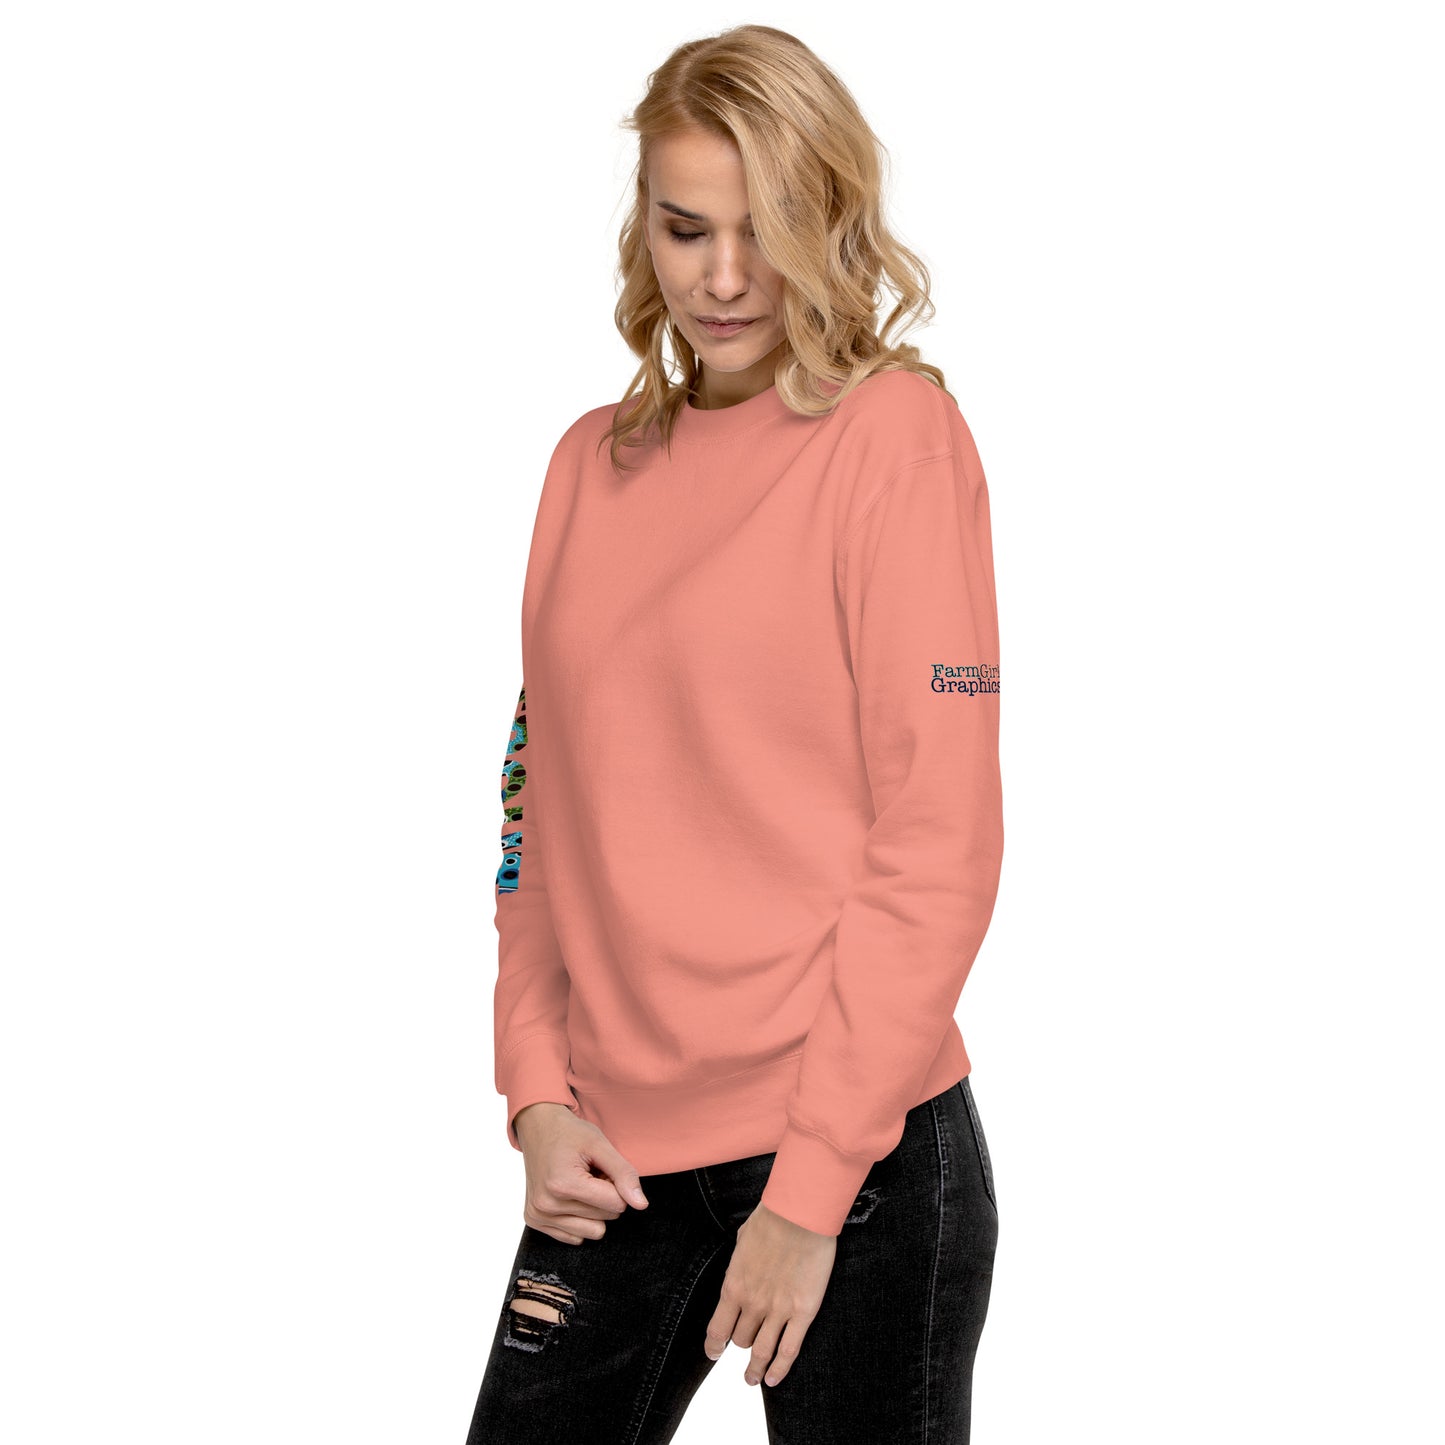 Trout PA Ladies Premium Sweatshirt